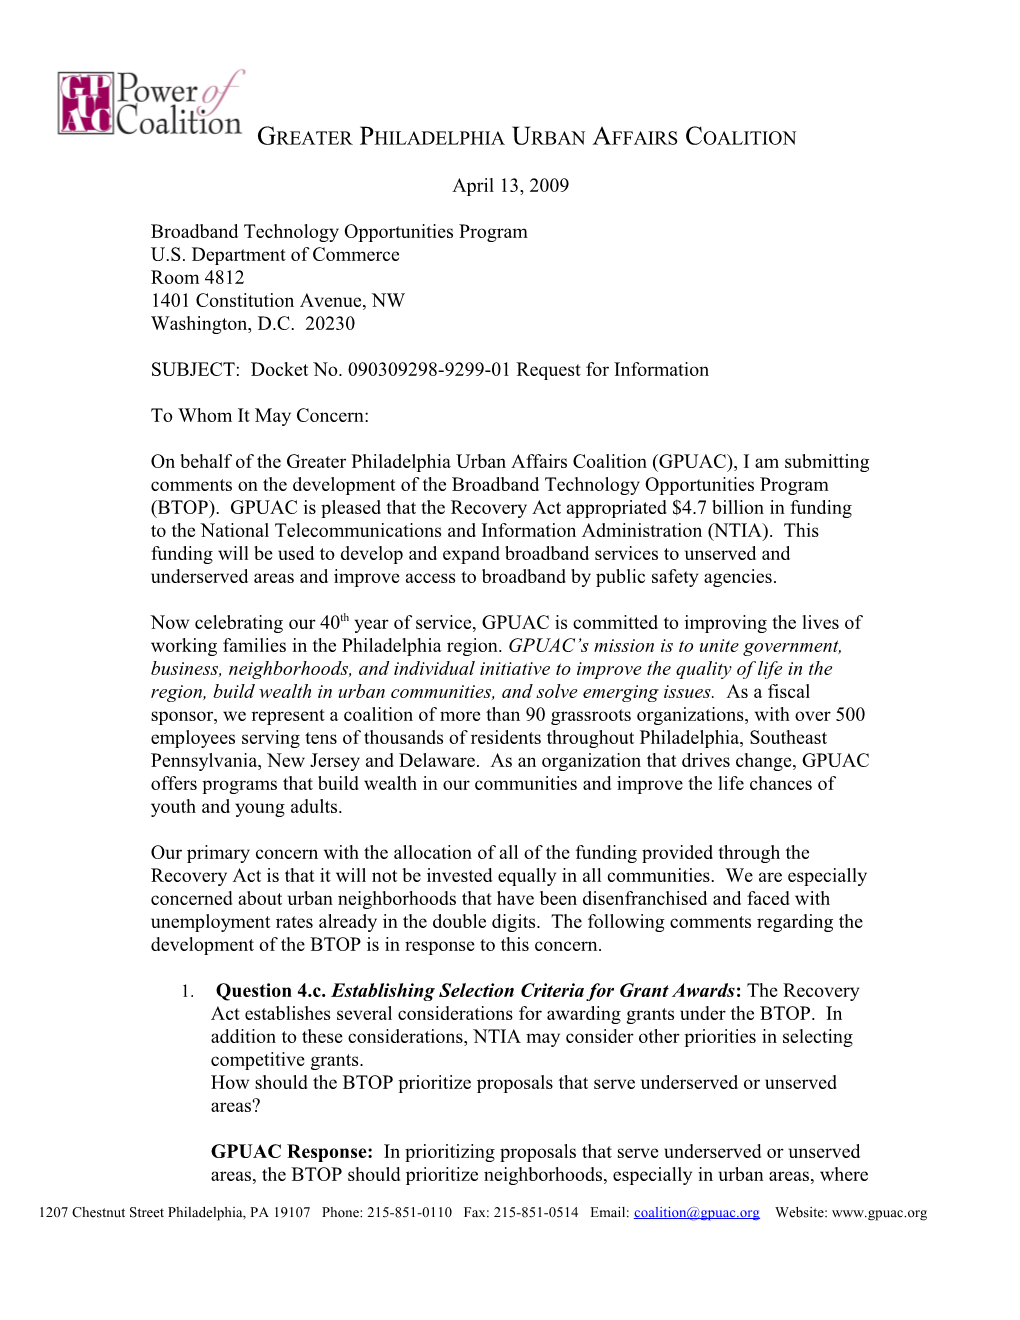 Letter to Accompany Congressman Brady Projects